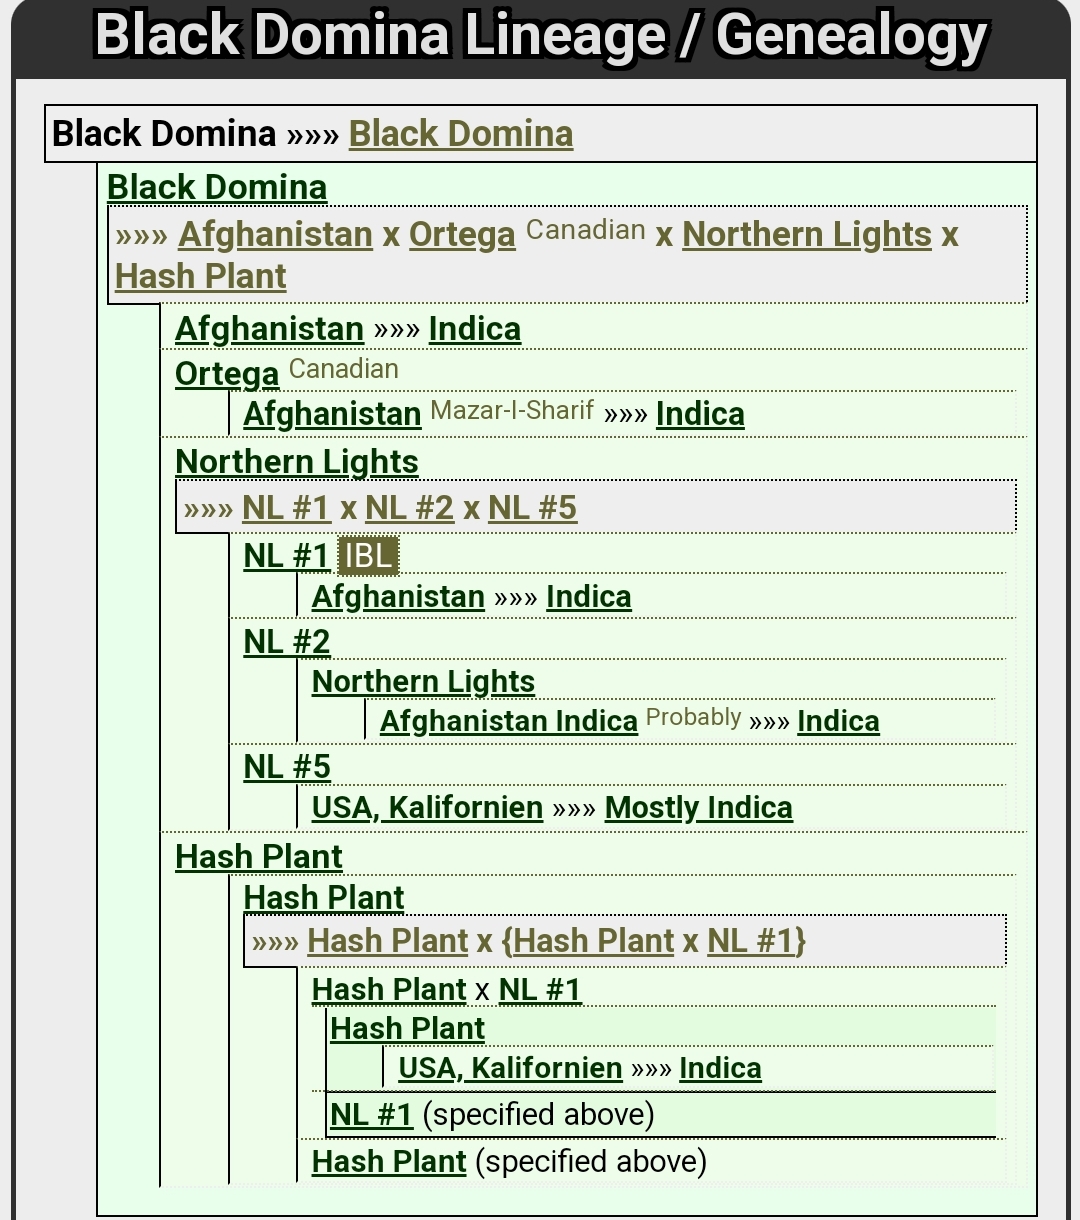 Black Domina-Lineage